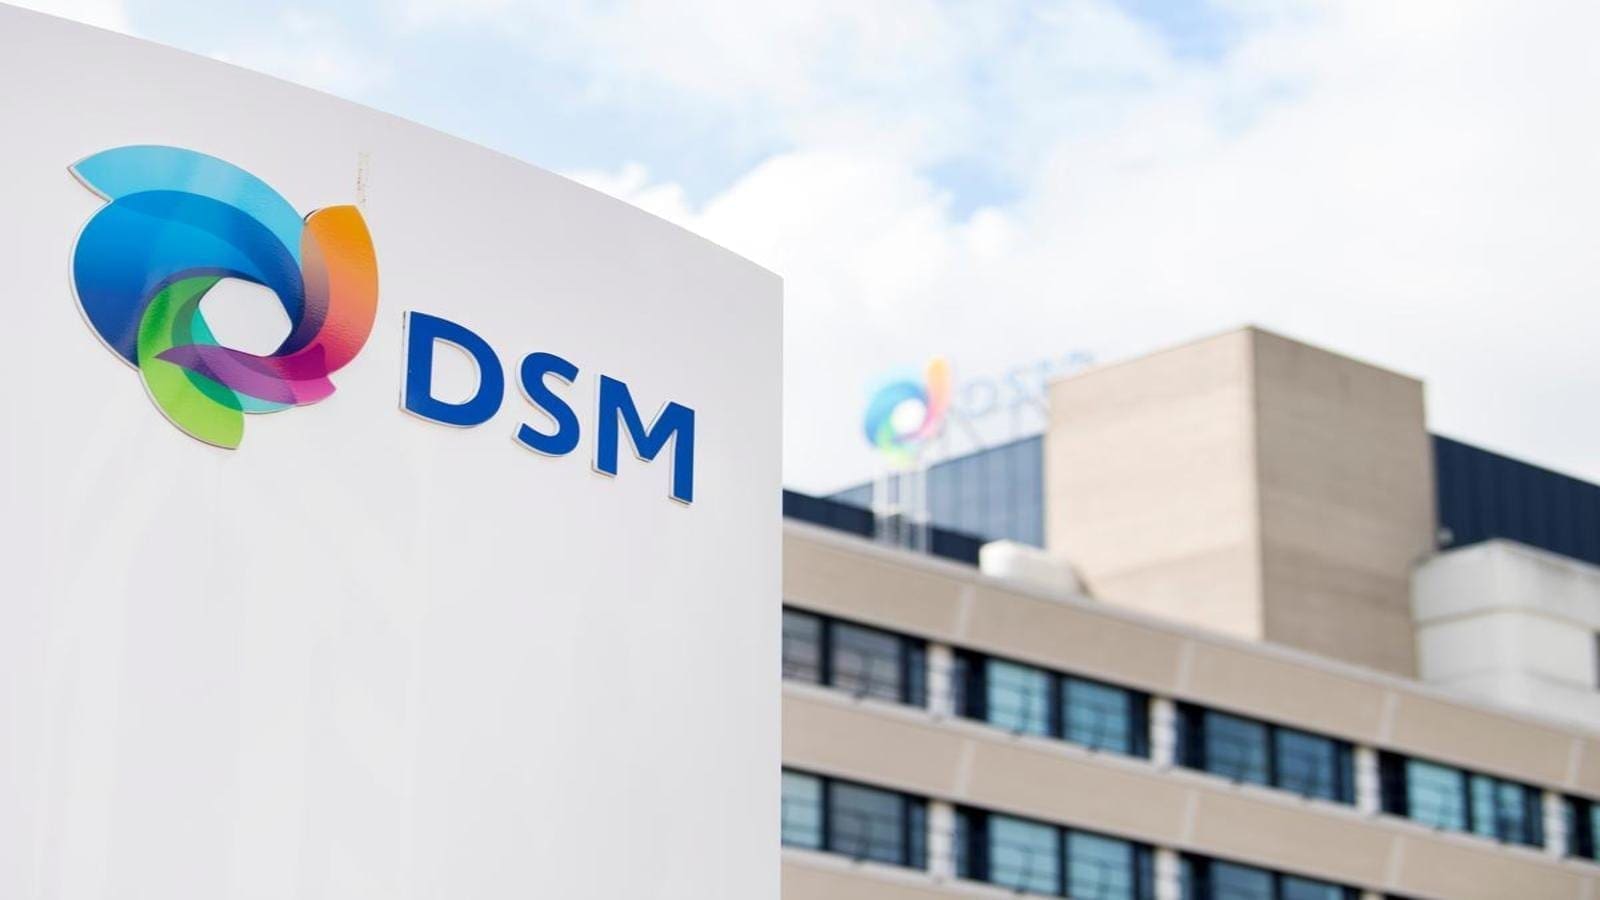 DSM integrates nutrition businesses to better address evolving market needs